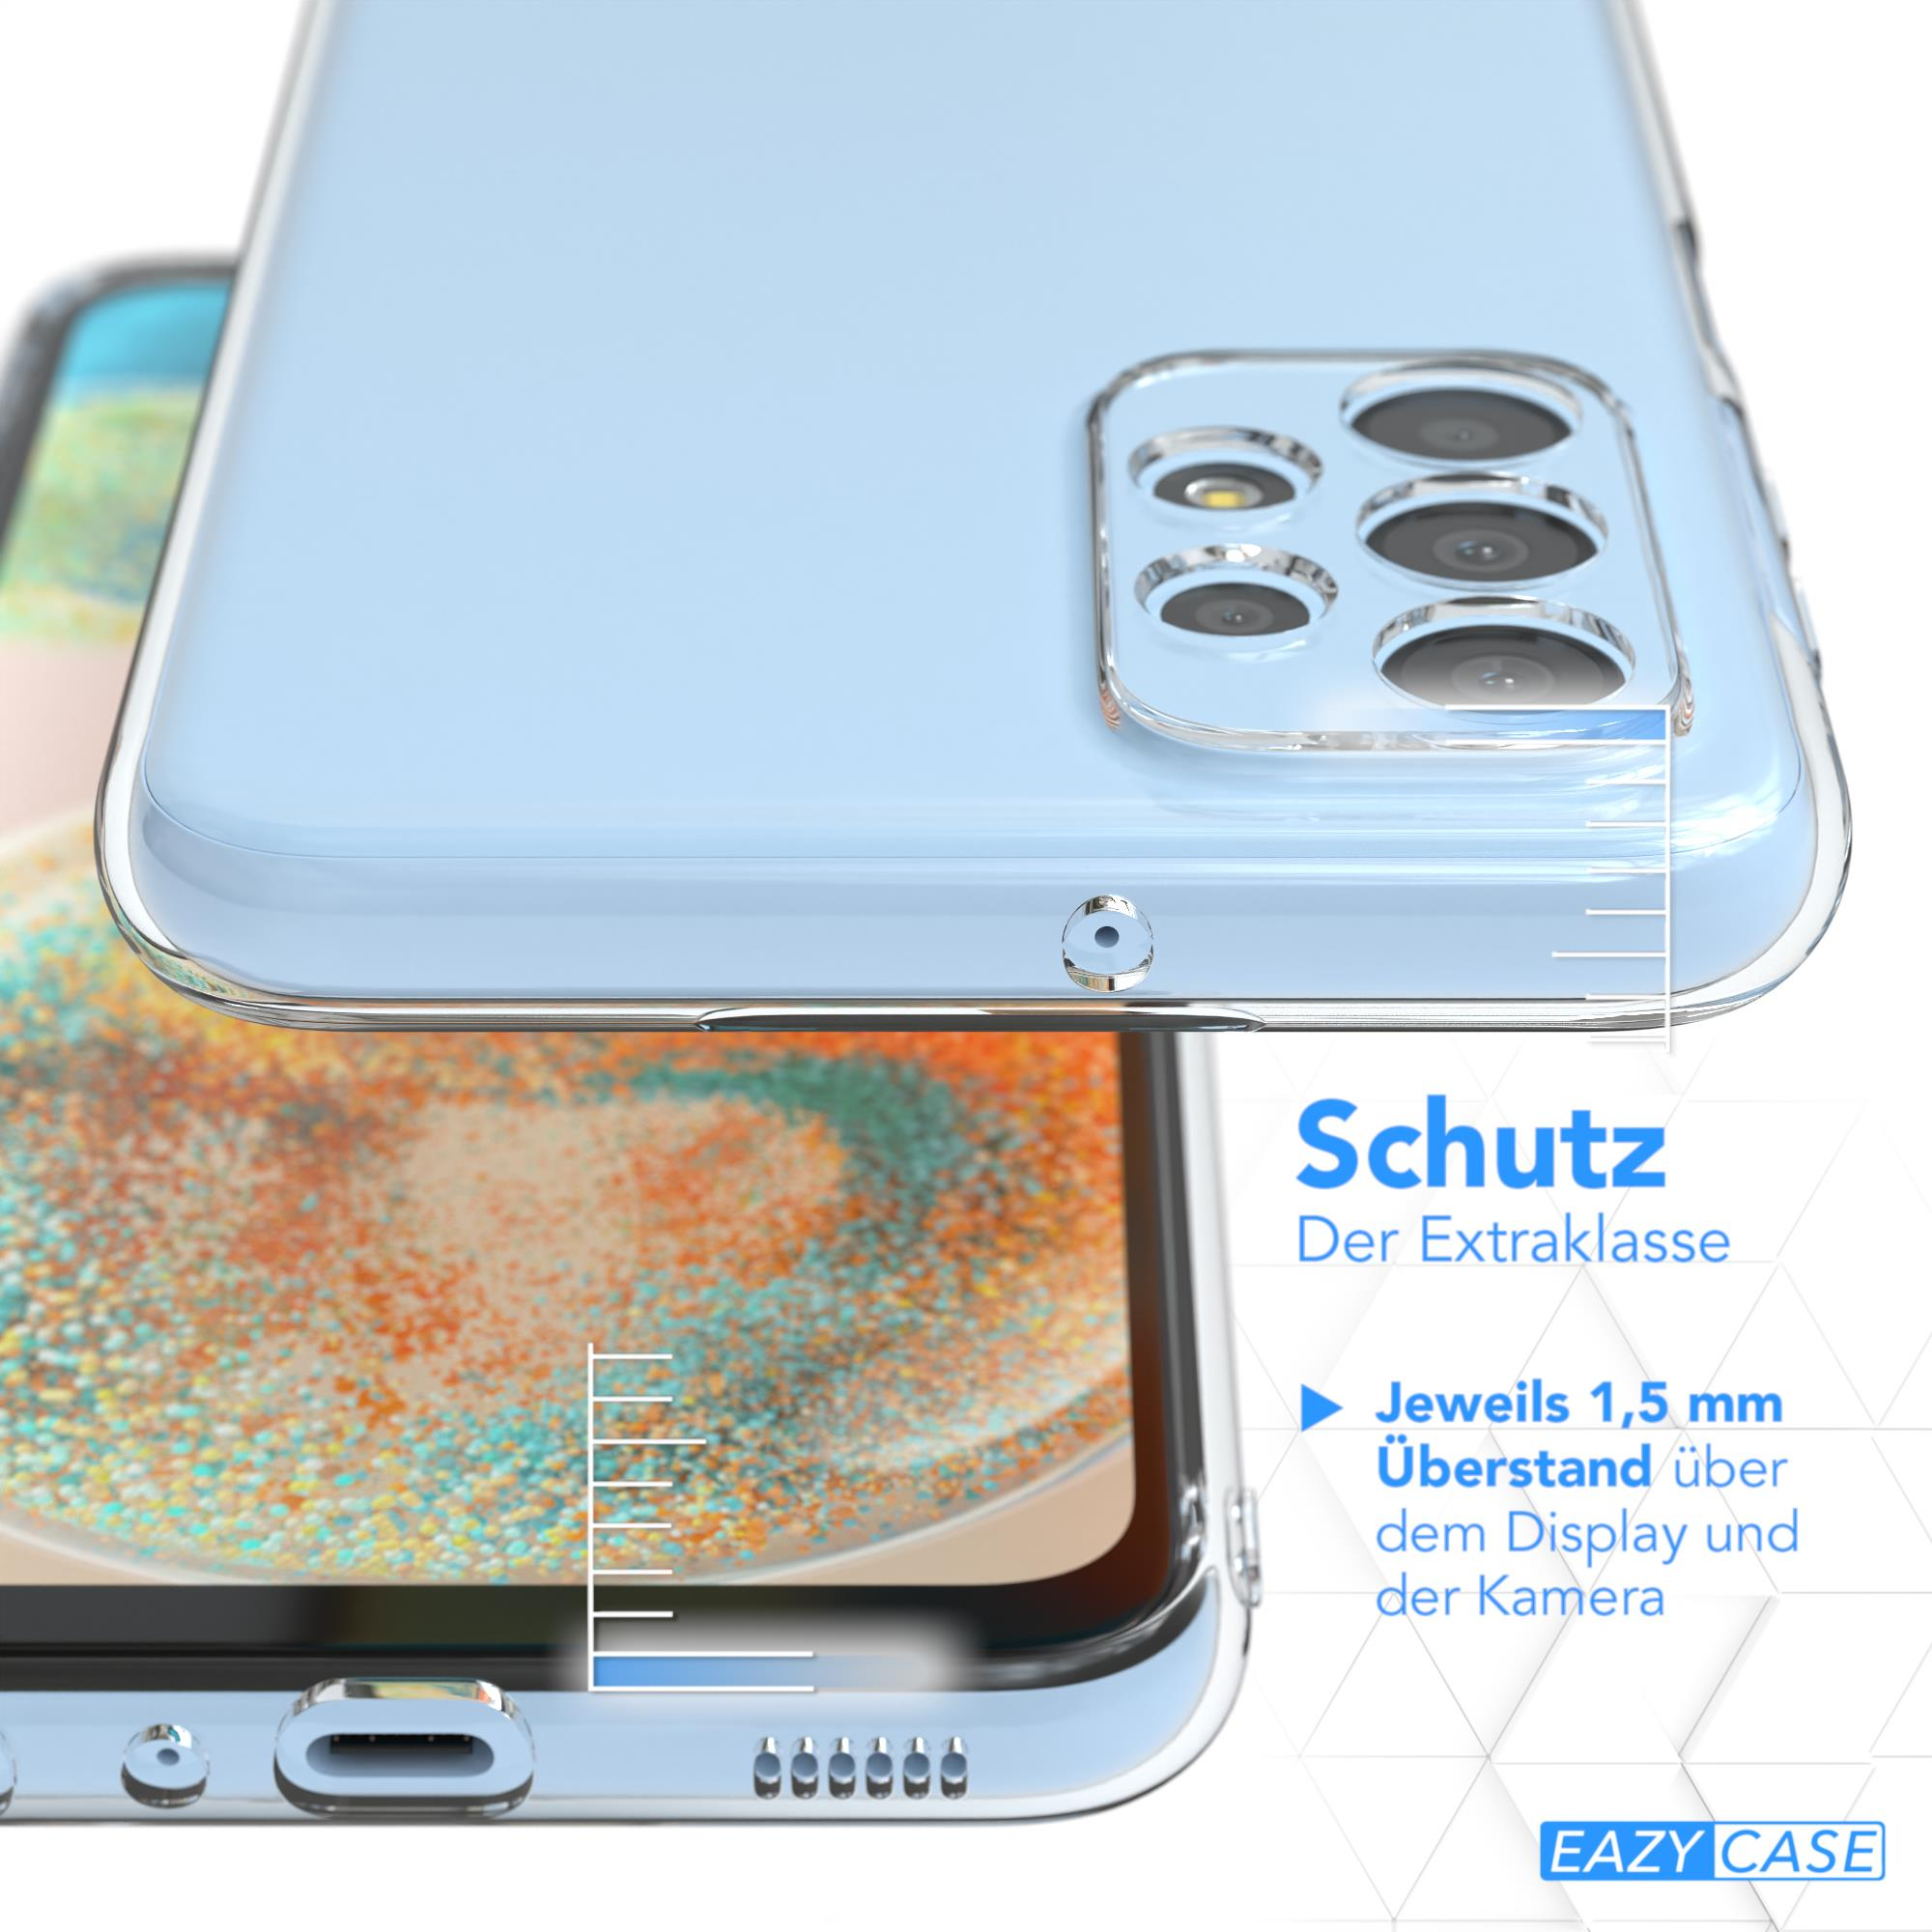 CASE A23 Durchsichtig Slimcover 5G, Clear, EAZY Samsung, Galaxy Backcover,